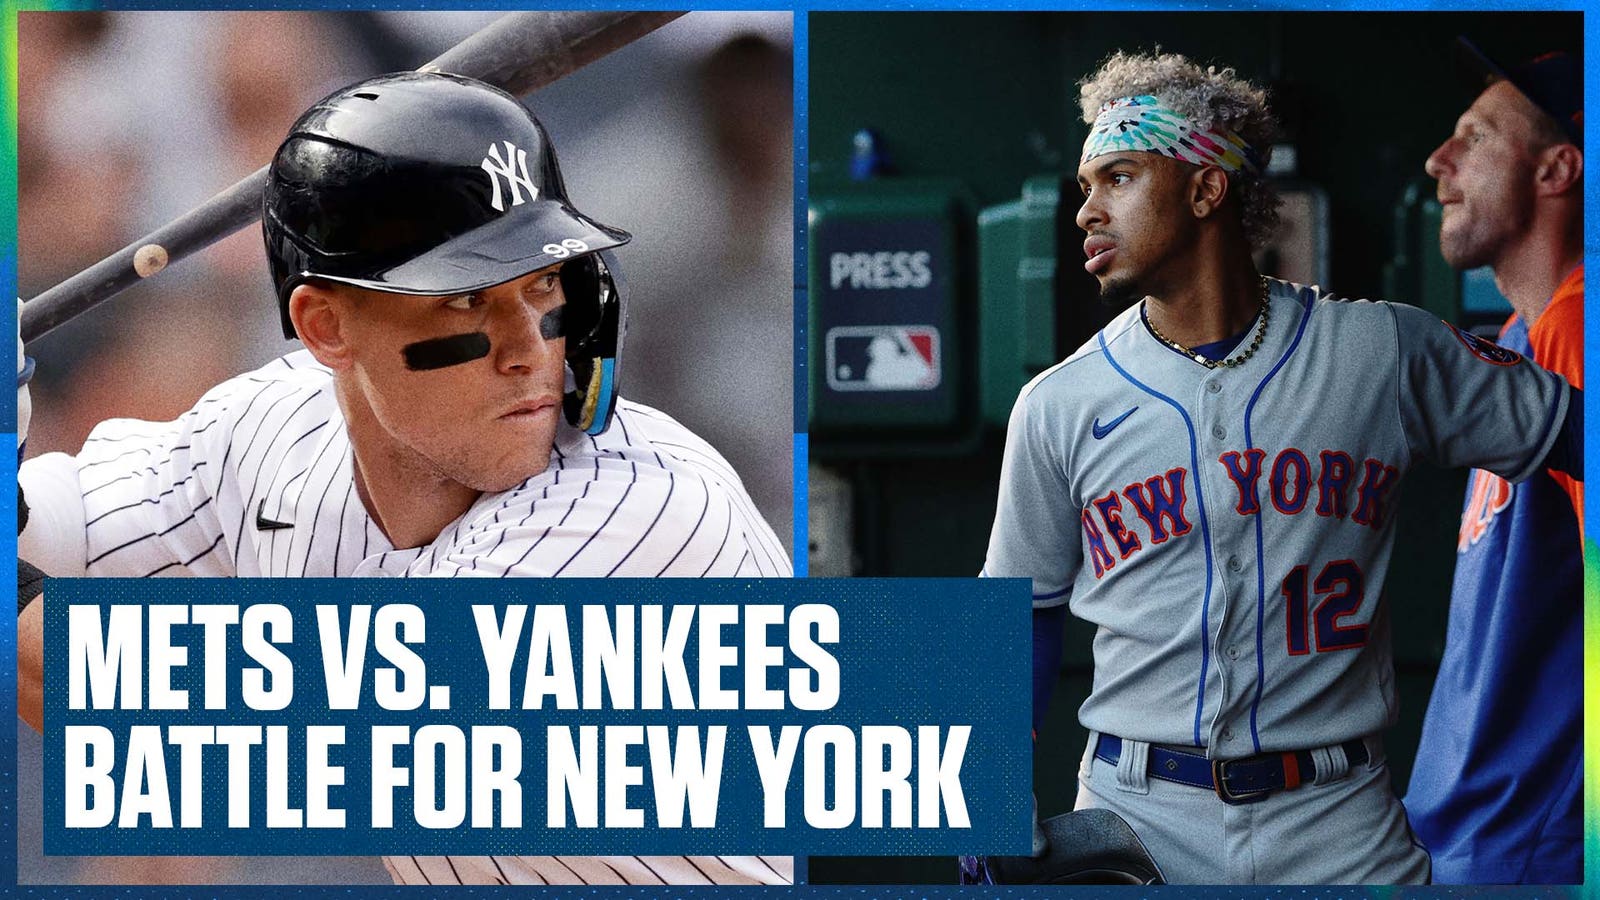 Mets, not Yankees, are kings of New York